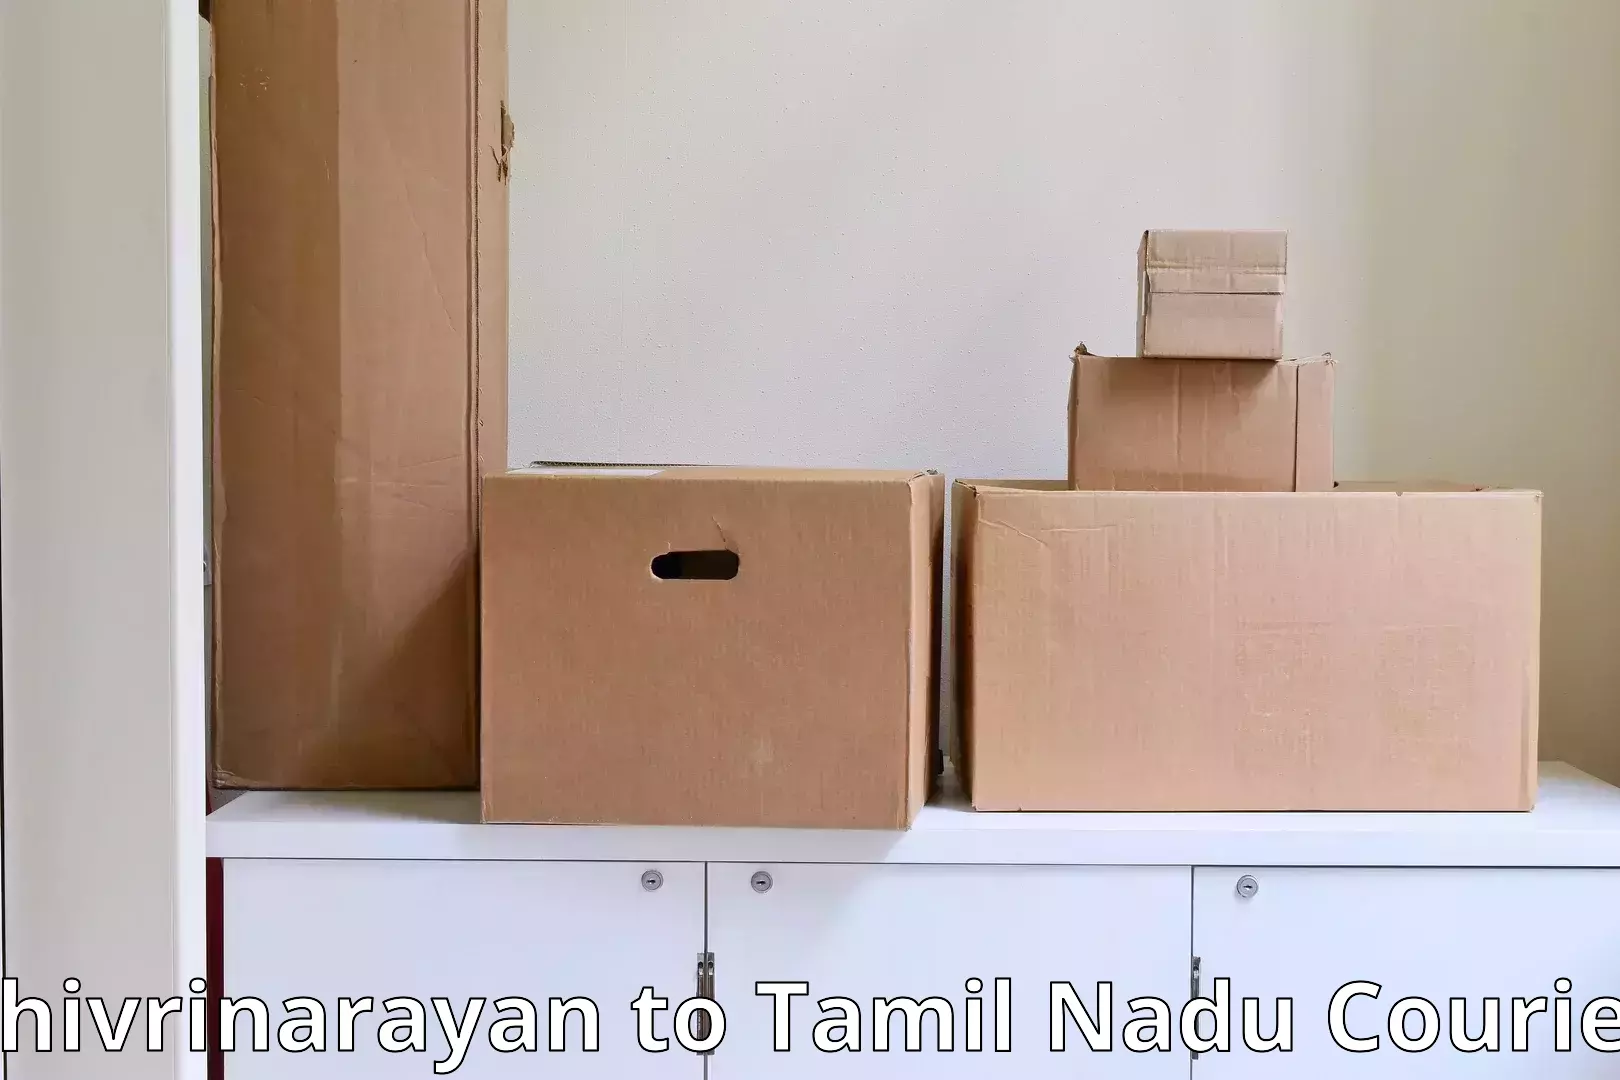 Furniture moving experts Shivrinarayan to Perambalur